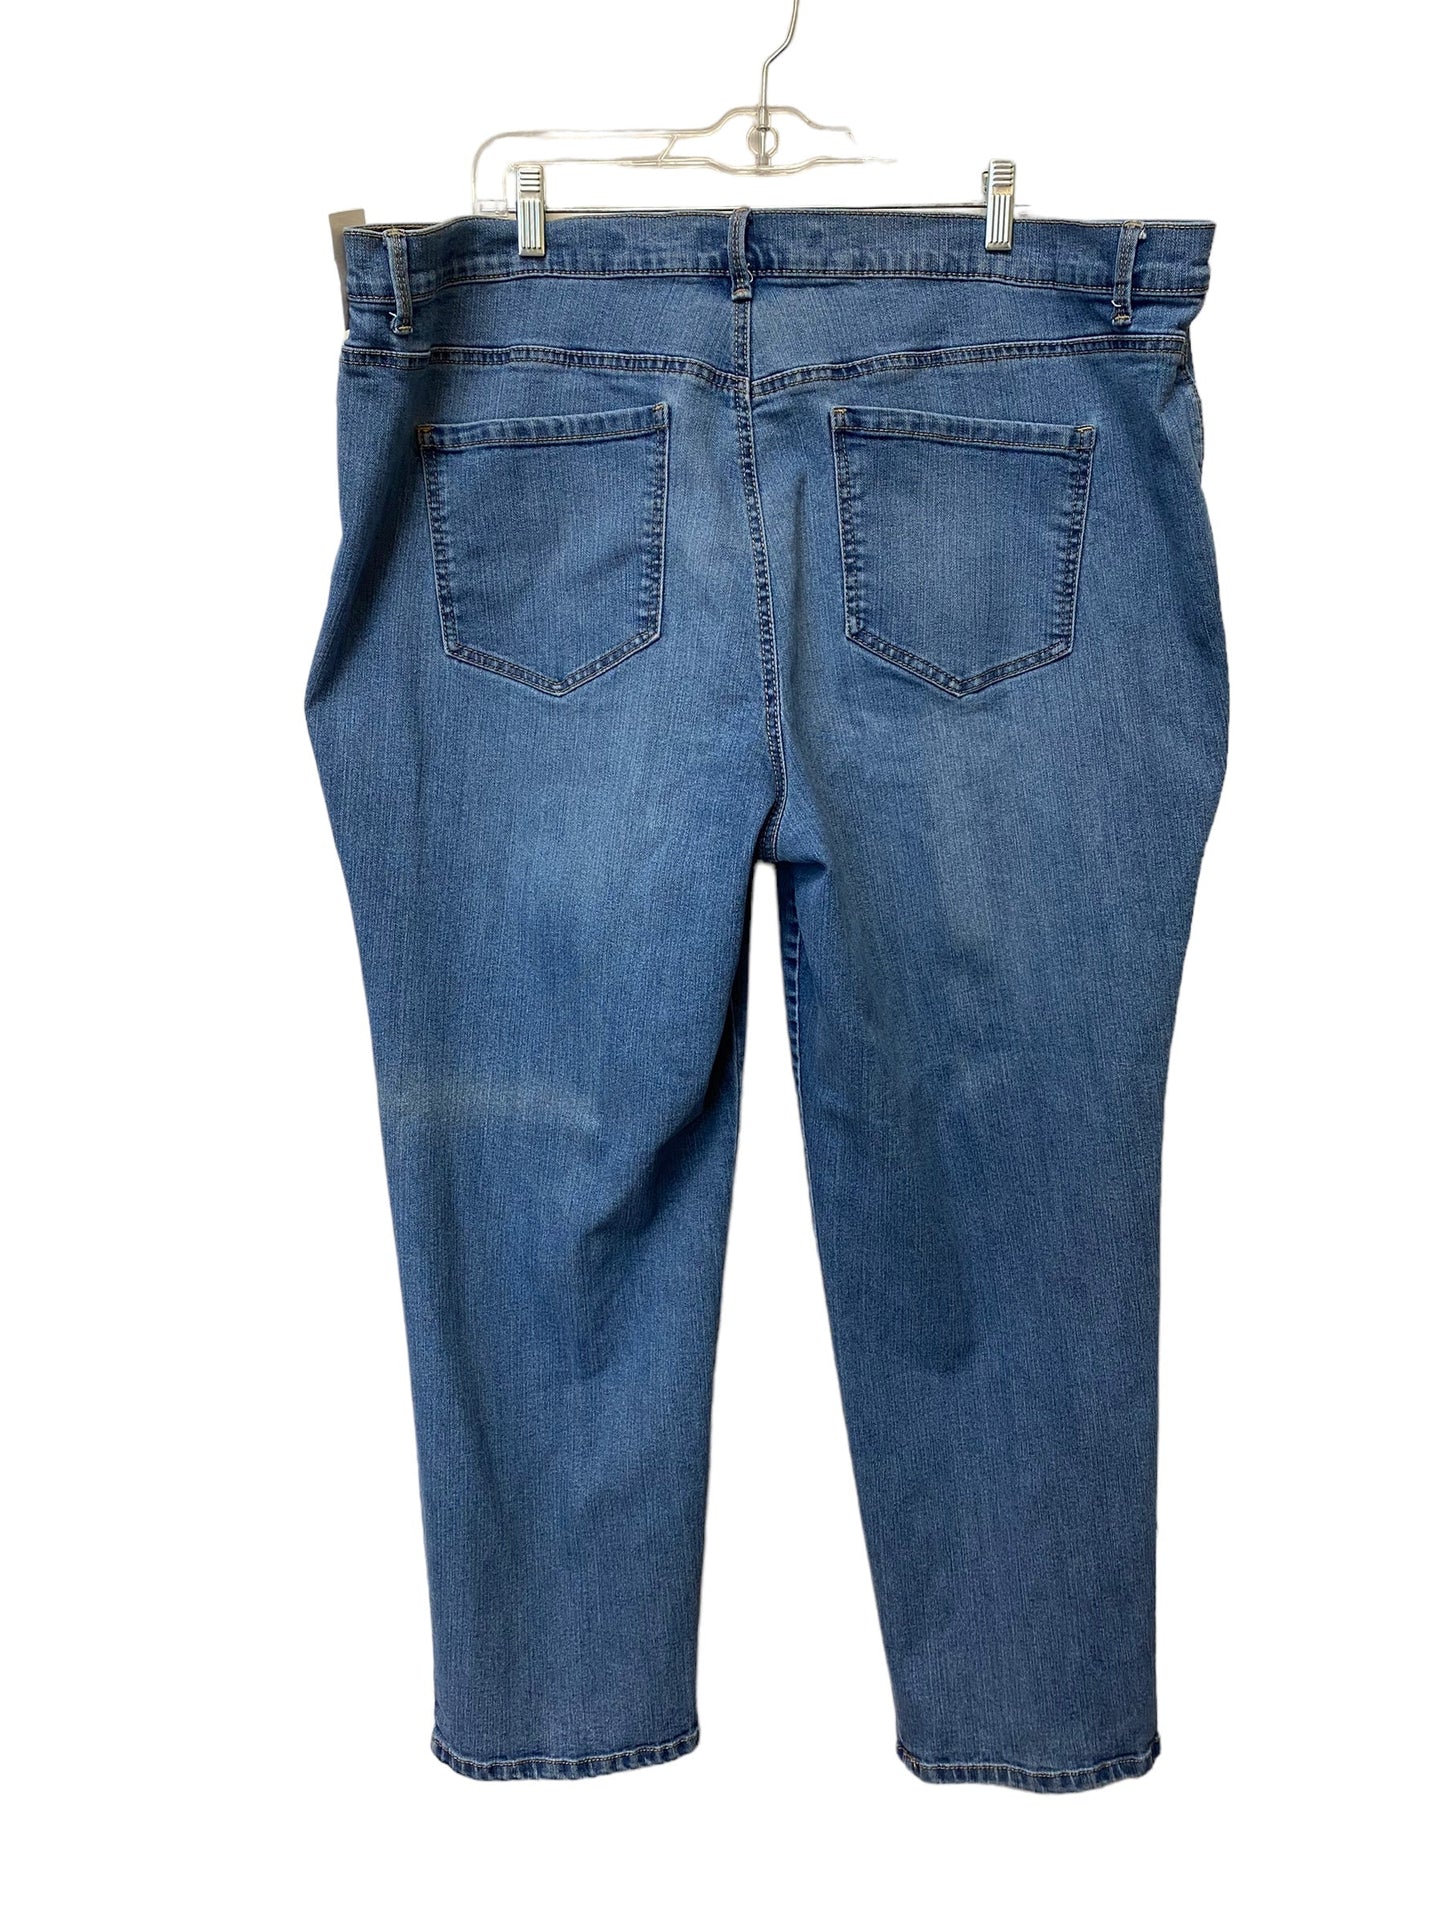 Jeans Skinny By Gloria Vanderbilt  Size: 22